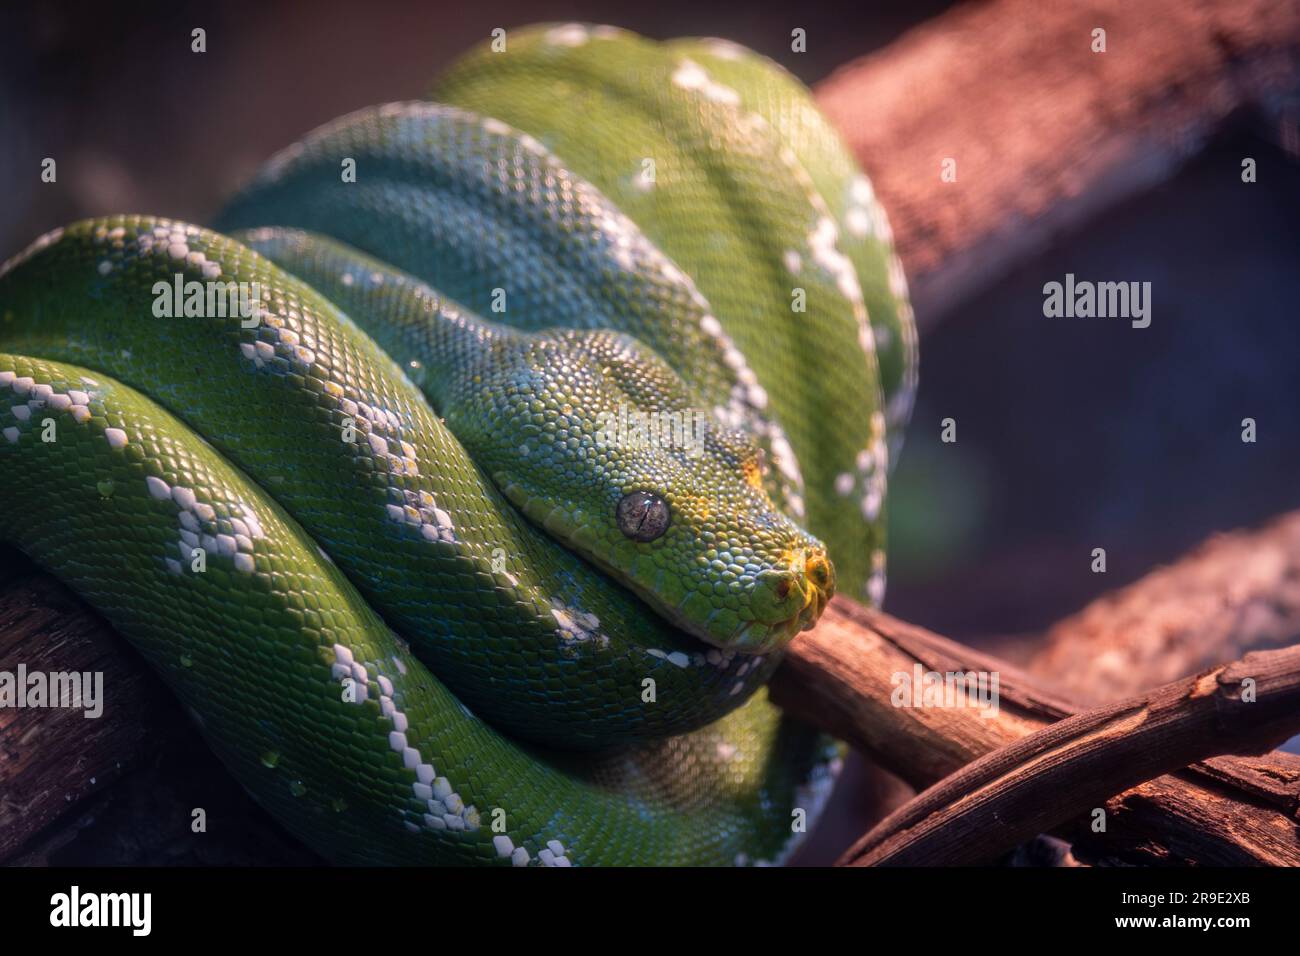 Green tree python (Morelia viridis) wrapped around branch and watching surroundings Stock Photo